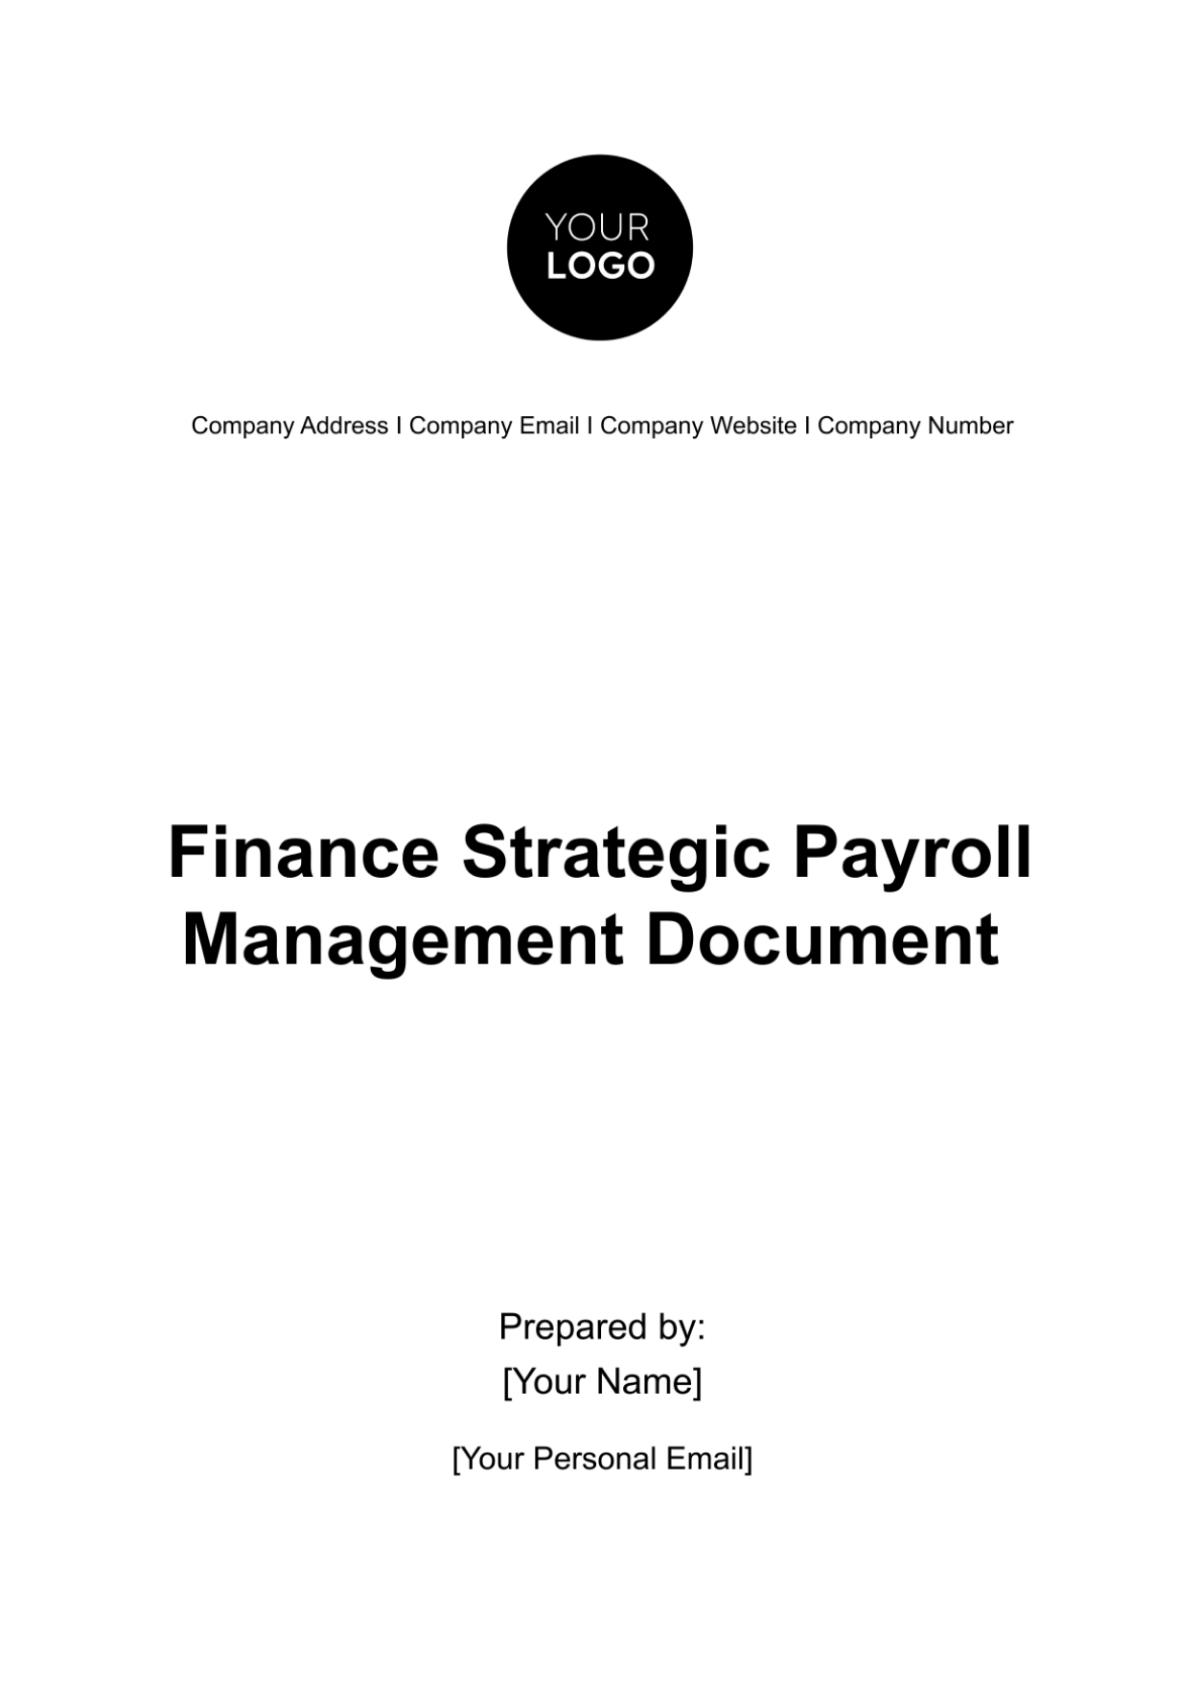 Free Finance Strategic Payroll Management Document Template